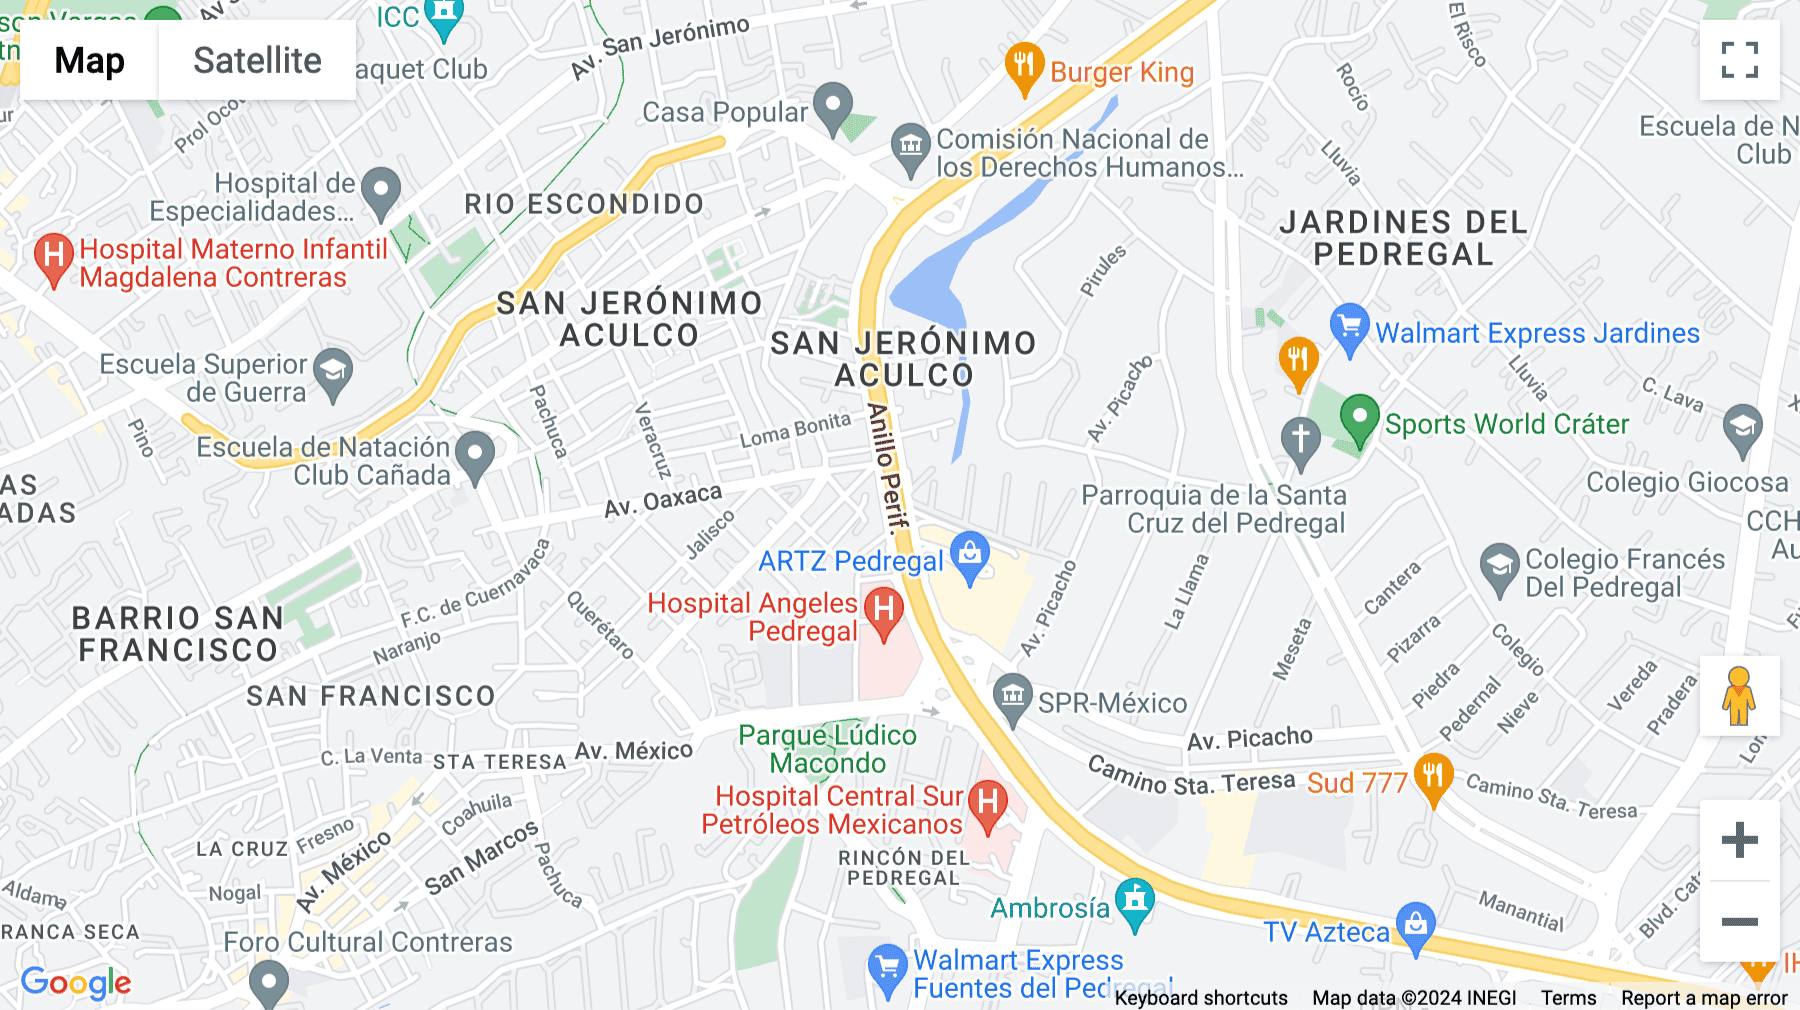 Click for interative map of Artz Pedregal, Boulevard Adolfo Ruiz Cortines 3720, Jardines de Pedregal, Mexico City